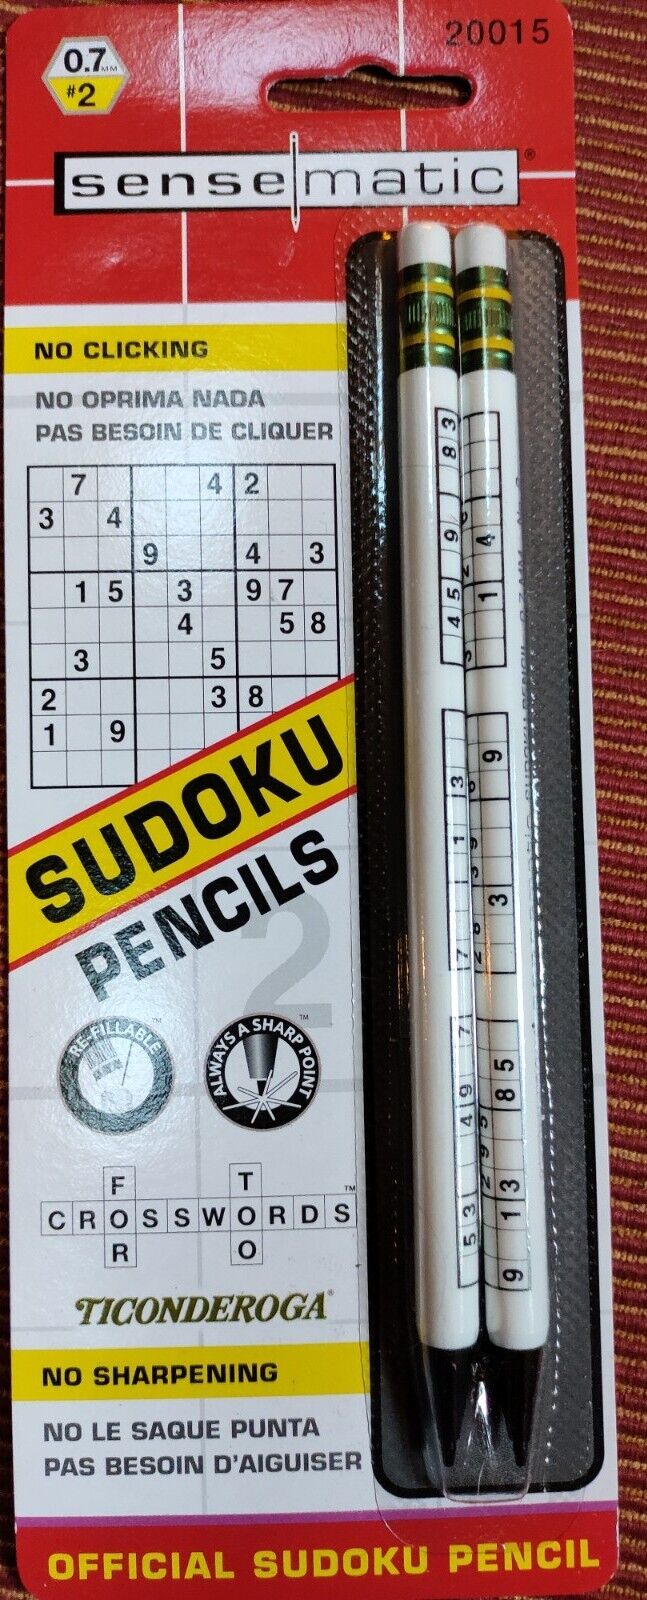 Auto Feed Sudoku / Crossword Pencils (2)